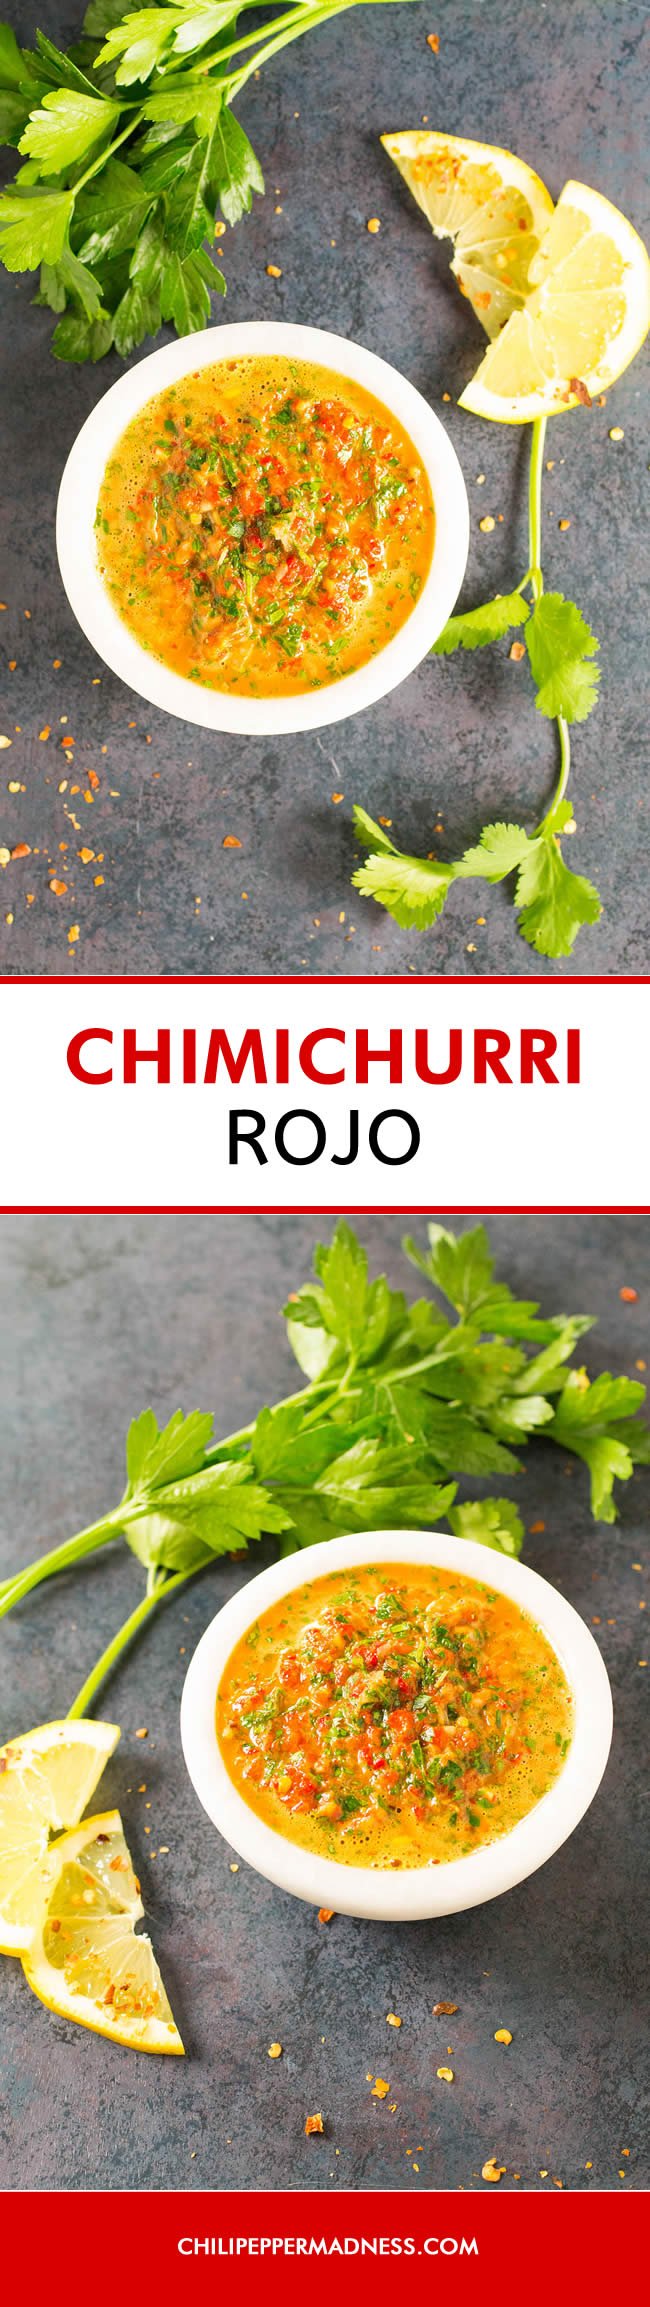 Easy Chimichurri Rojo (Red Chimichurri) - Recipe